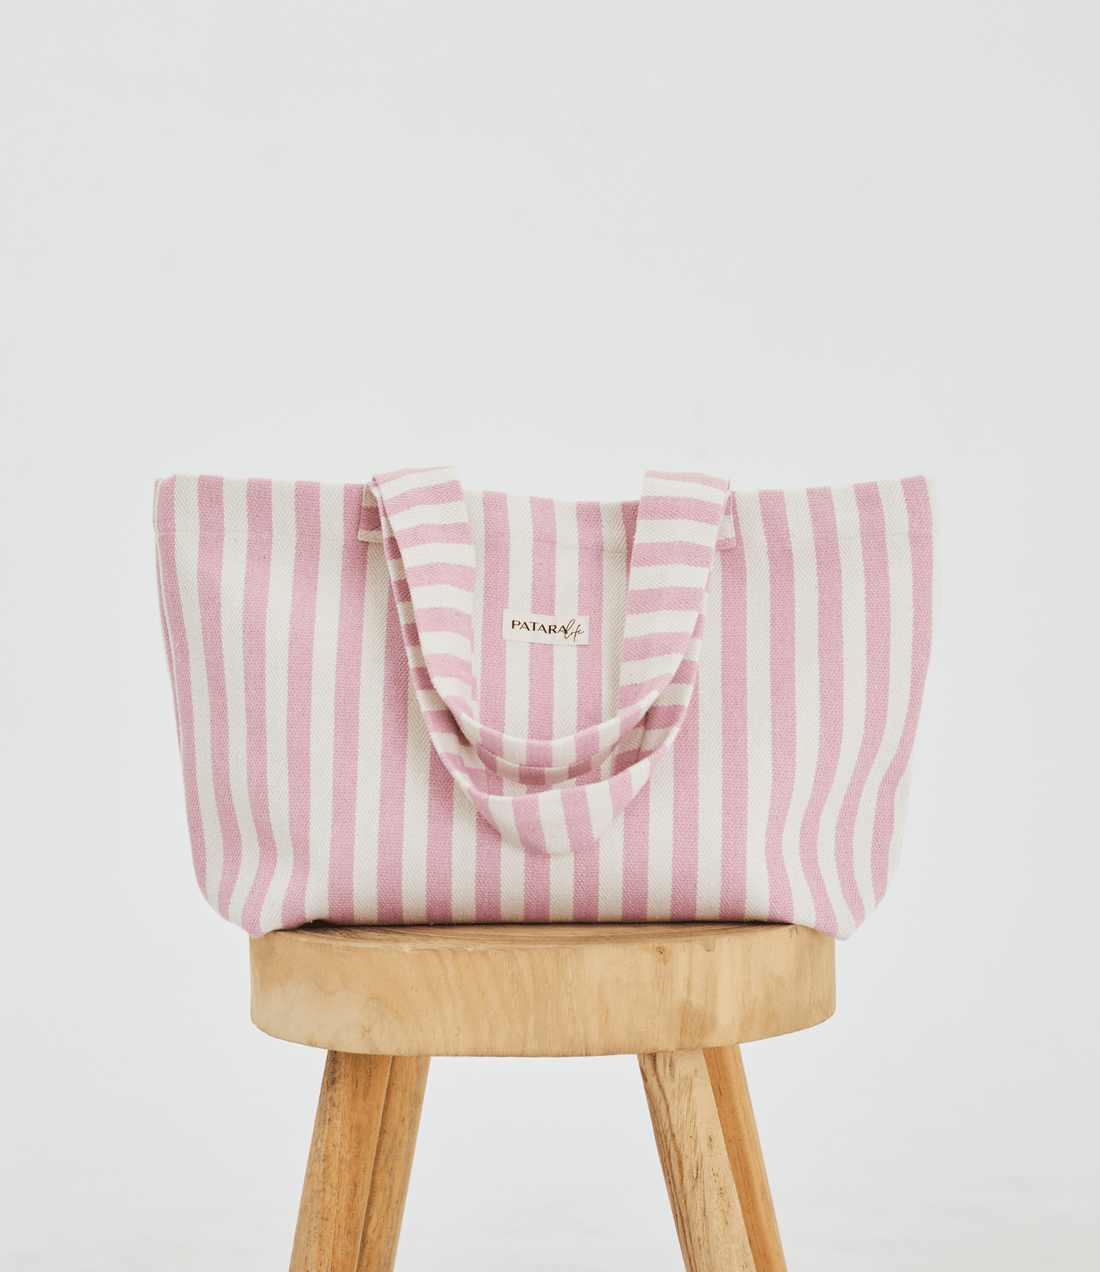 Herringbone woven linen tote bag in Color: Light Pink stripe